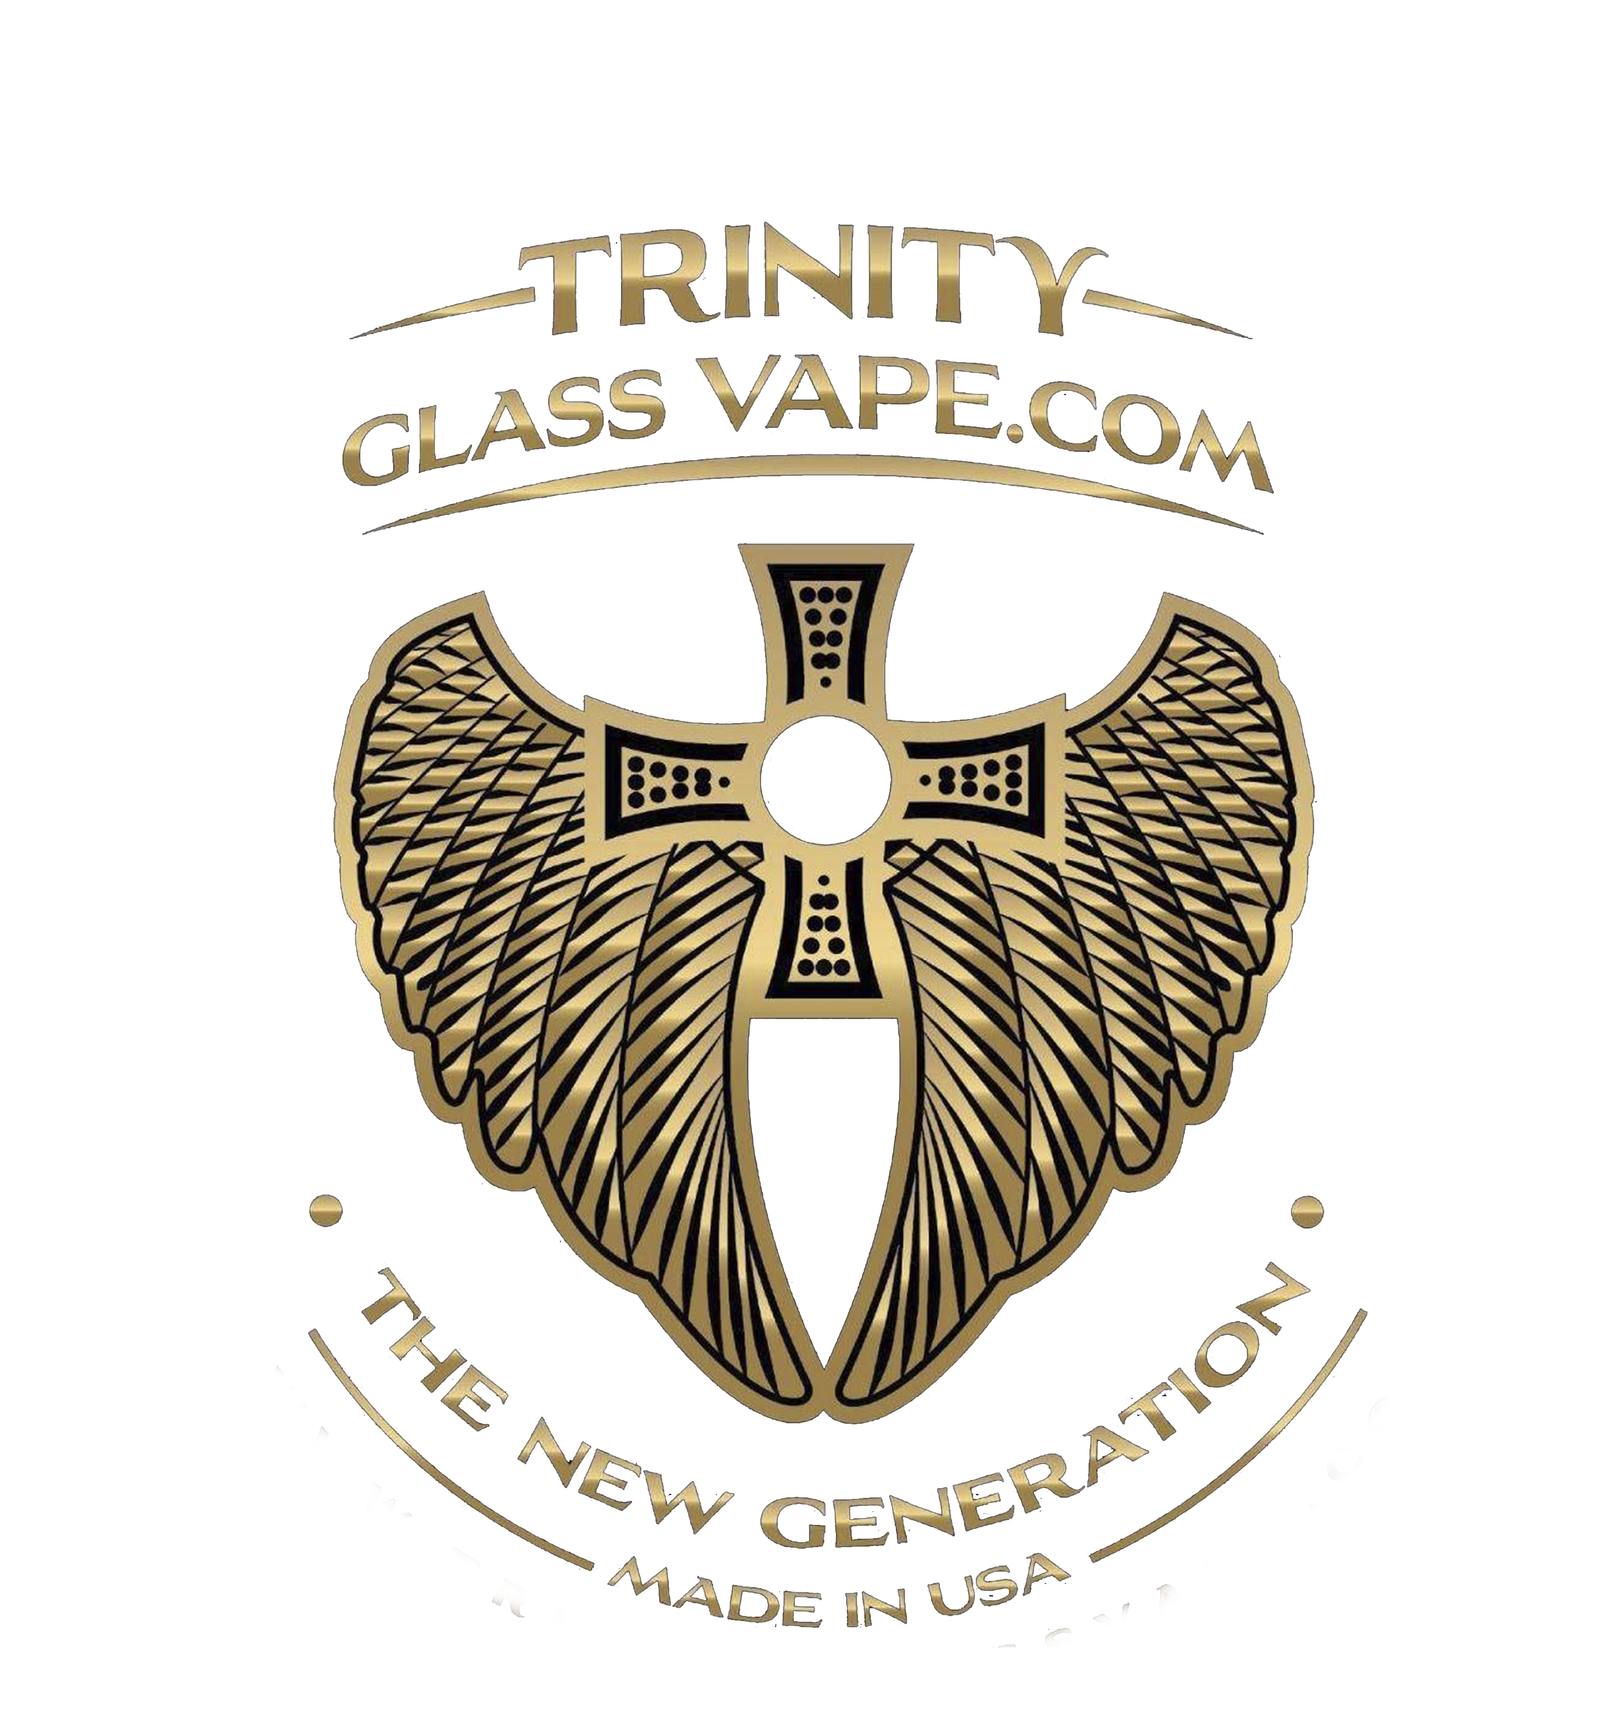 Trinity Glass Vape